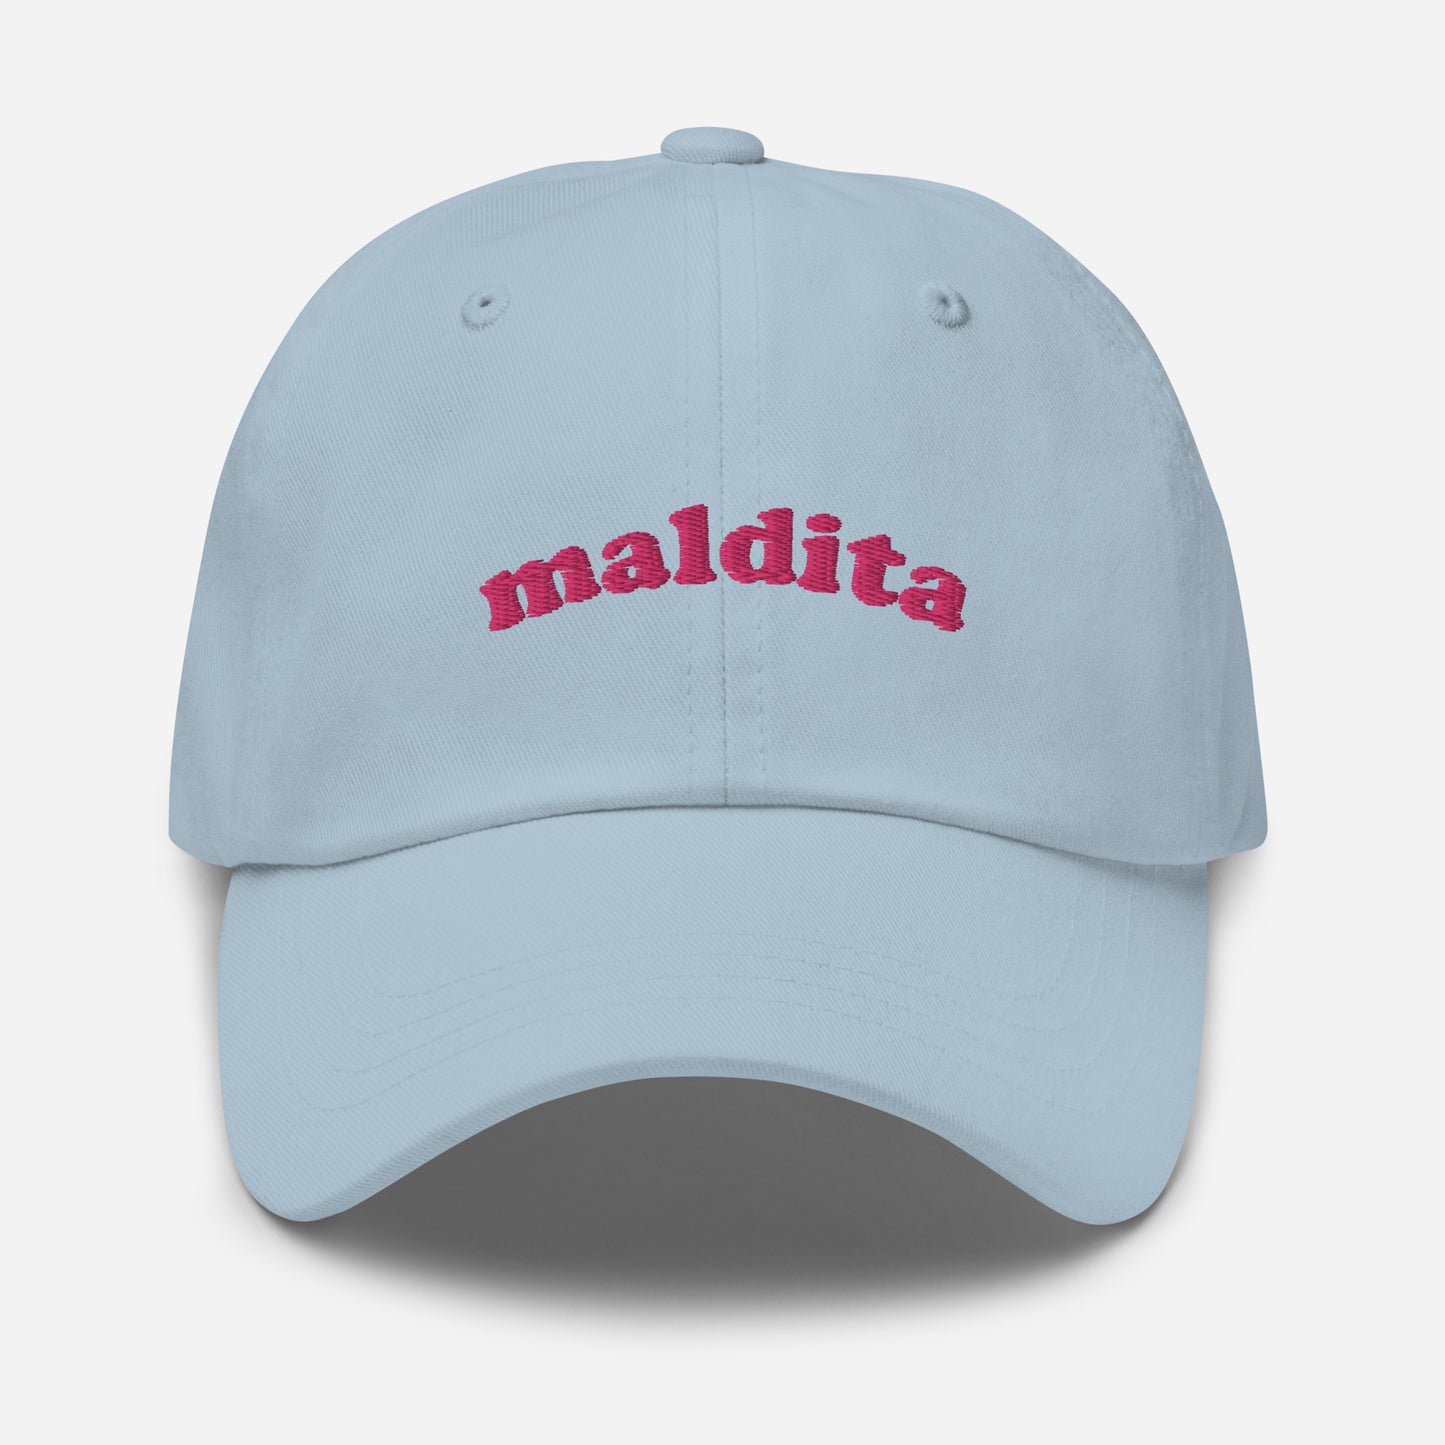 Maldita Hat